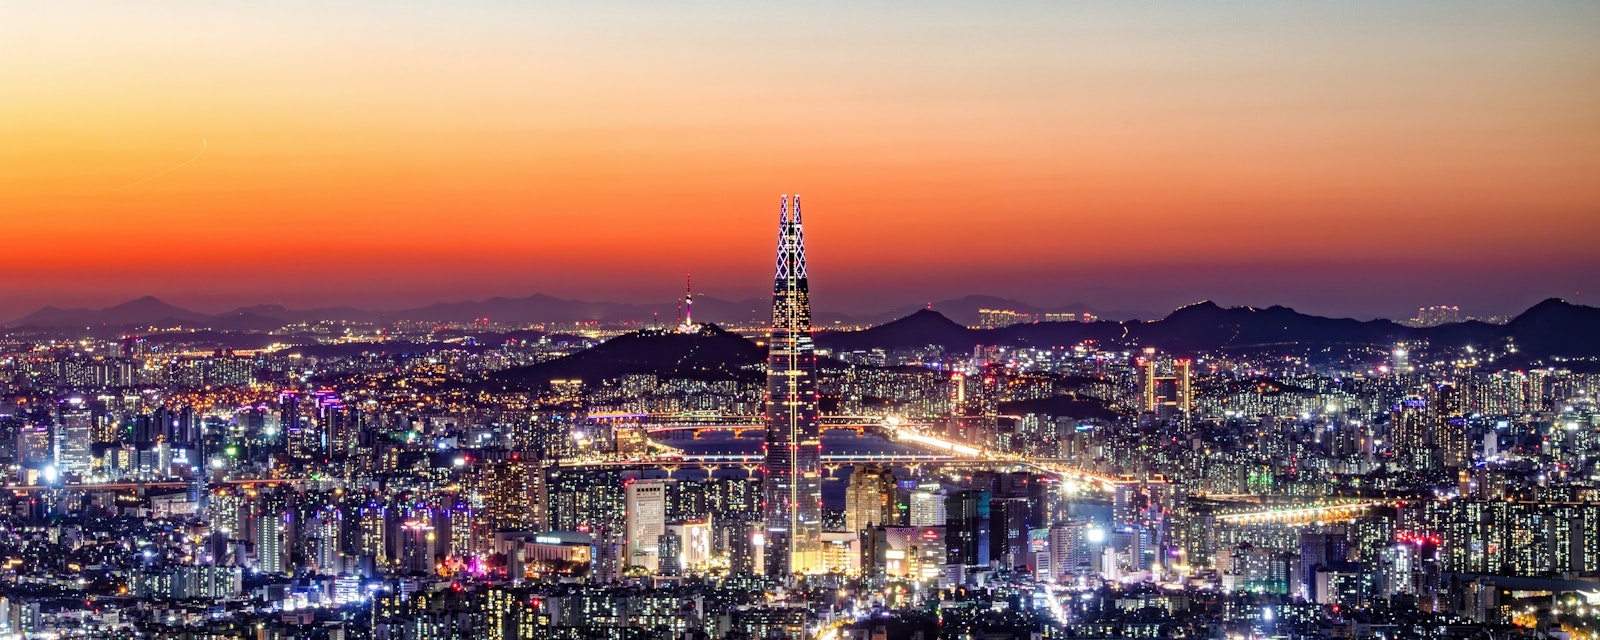 Gangnam-gu,,Seoul,,South,Korea,-,November,8,,2020:,Aerial,And